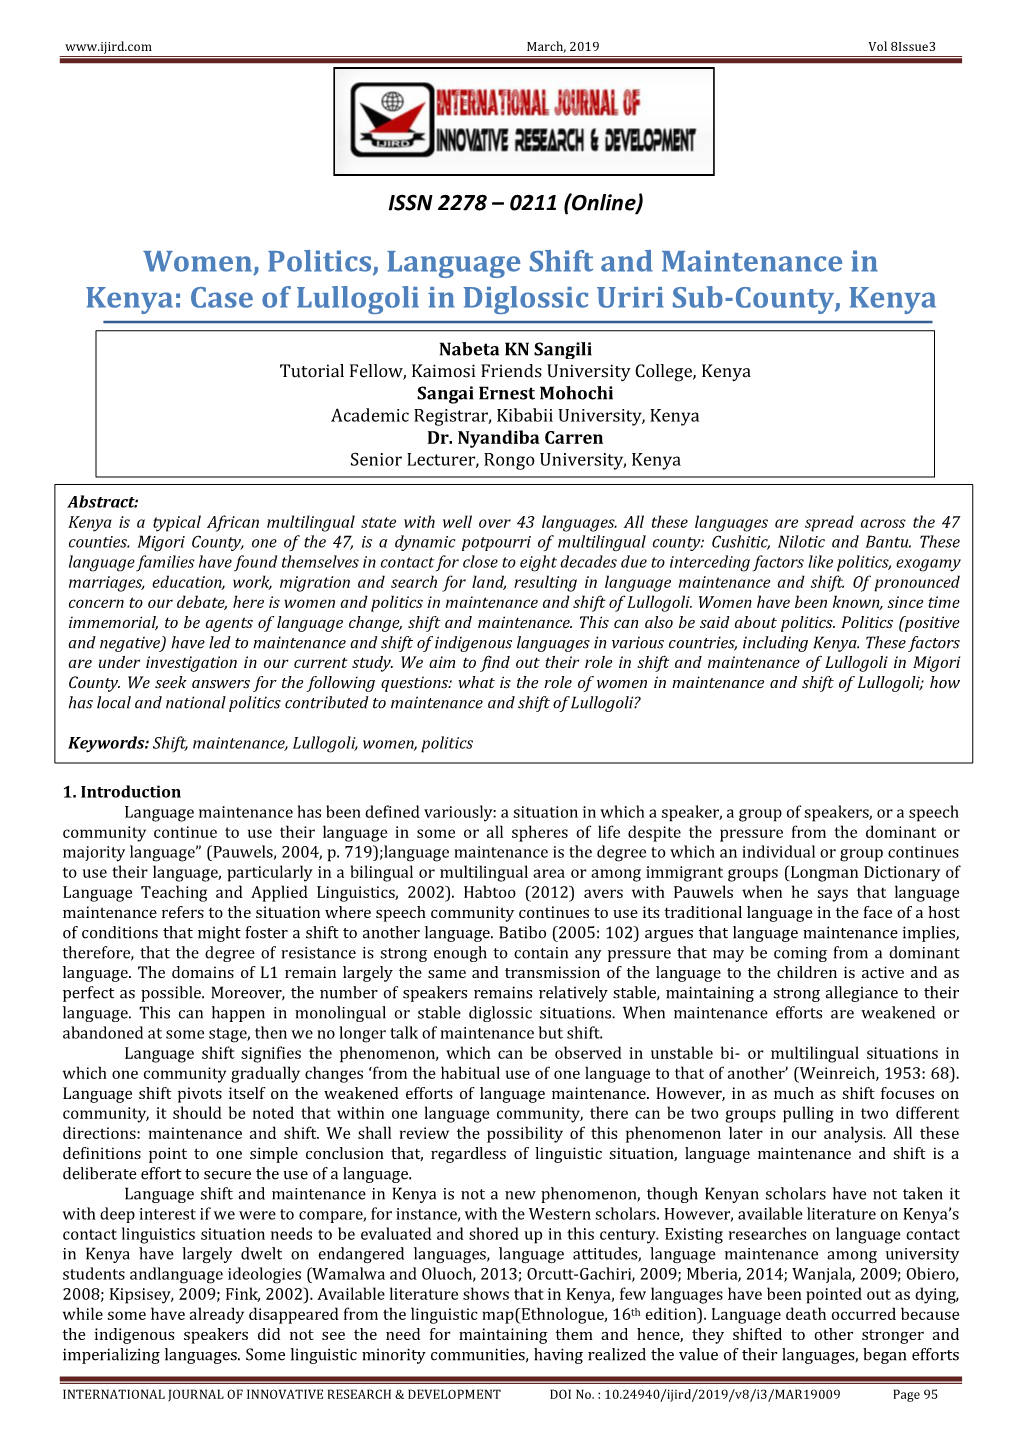 Women, Politics, Language Shift and Maintenance in Kenya: Case of Lullogoli in Diglossic Uriri Sub-County, Kenya